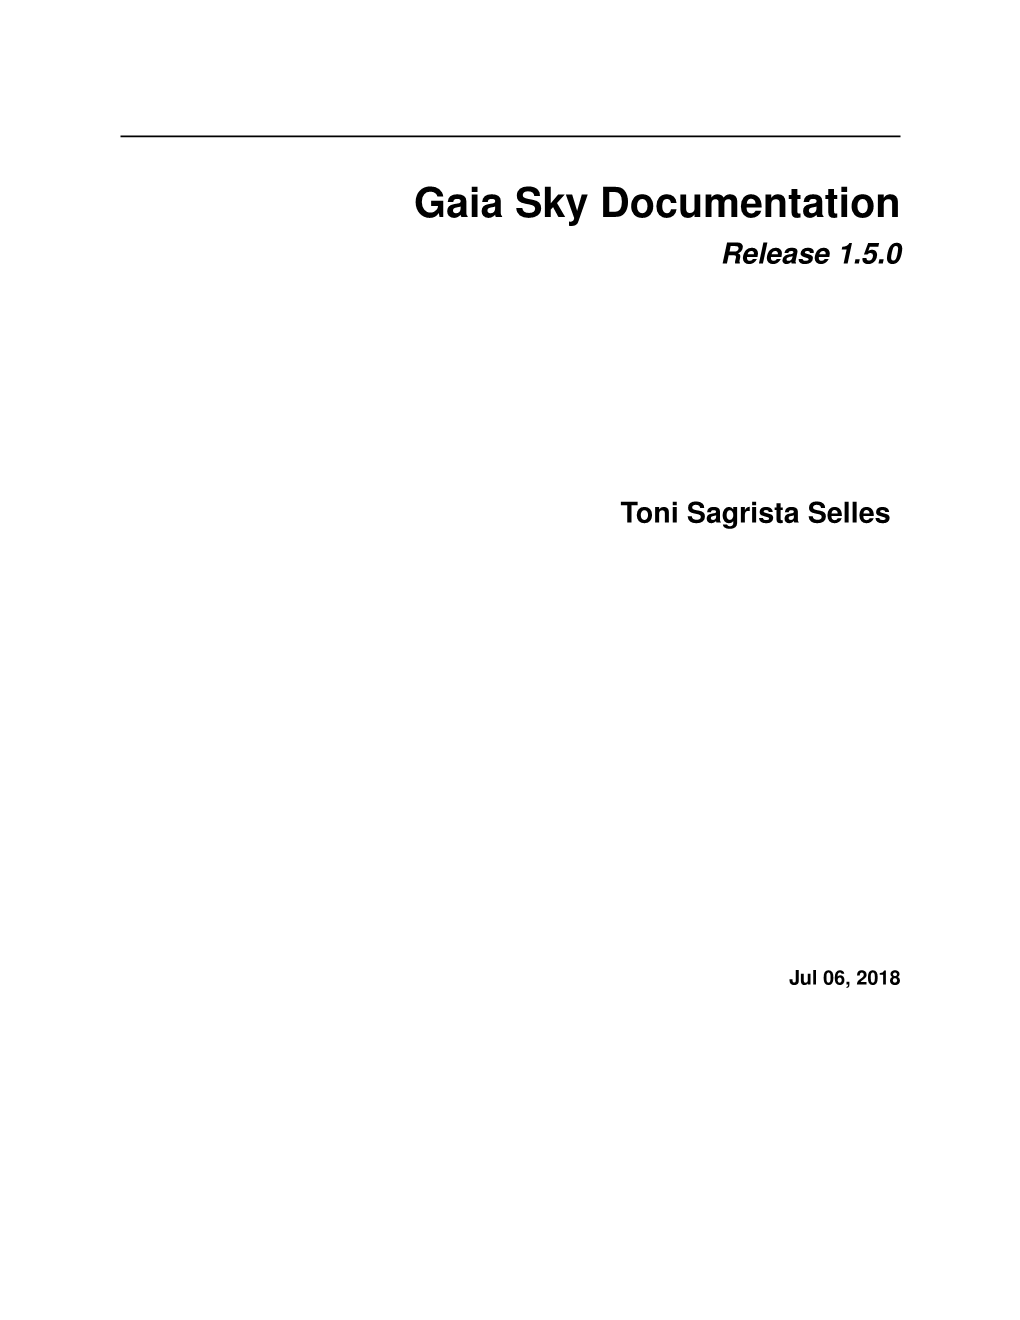 Gaia Sky Documentation Release 1.5.0